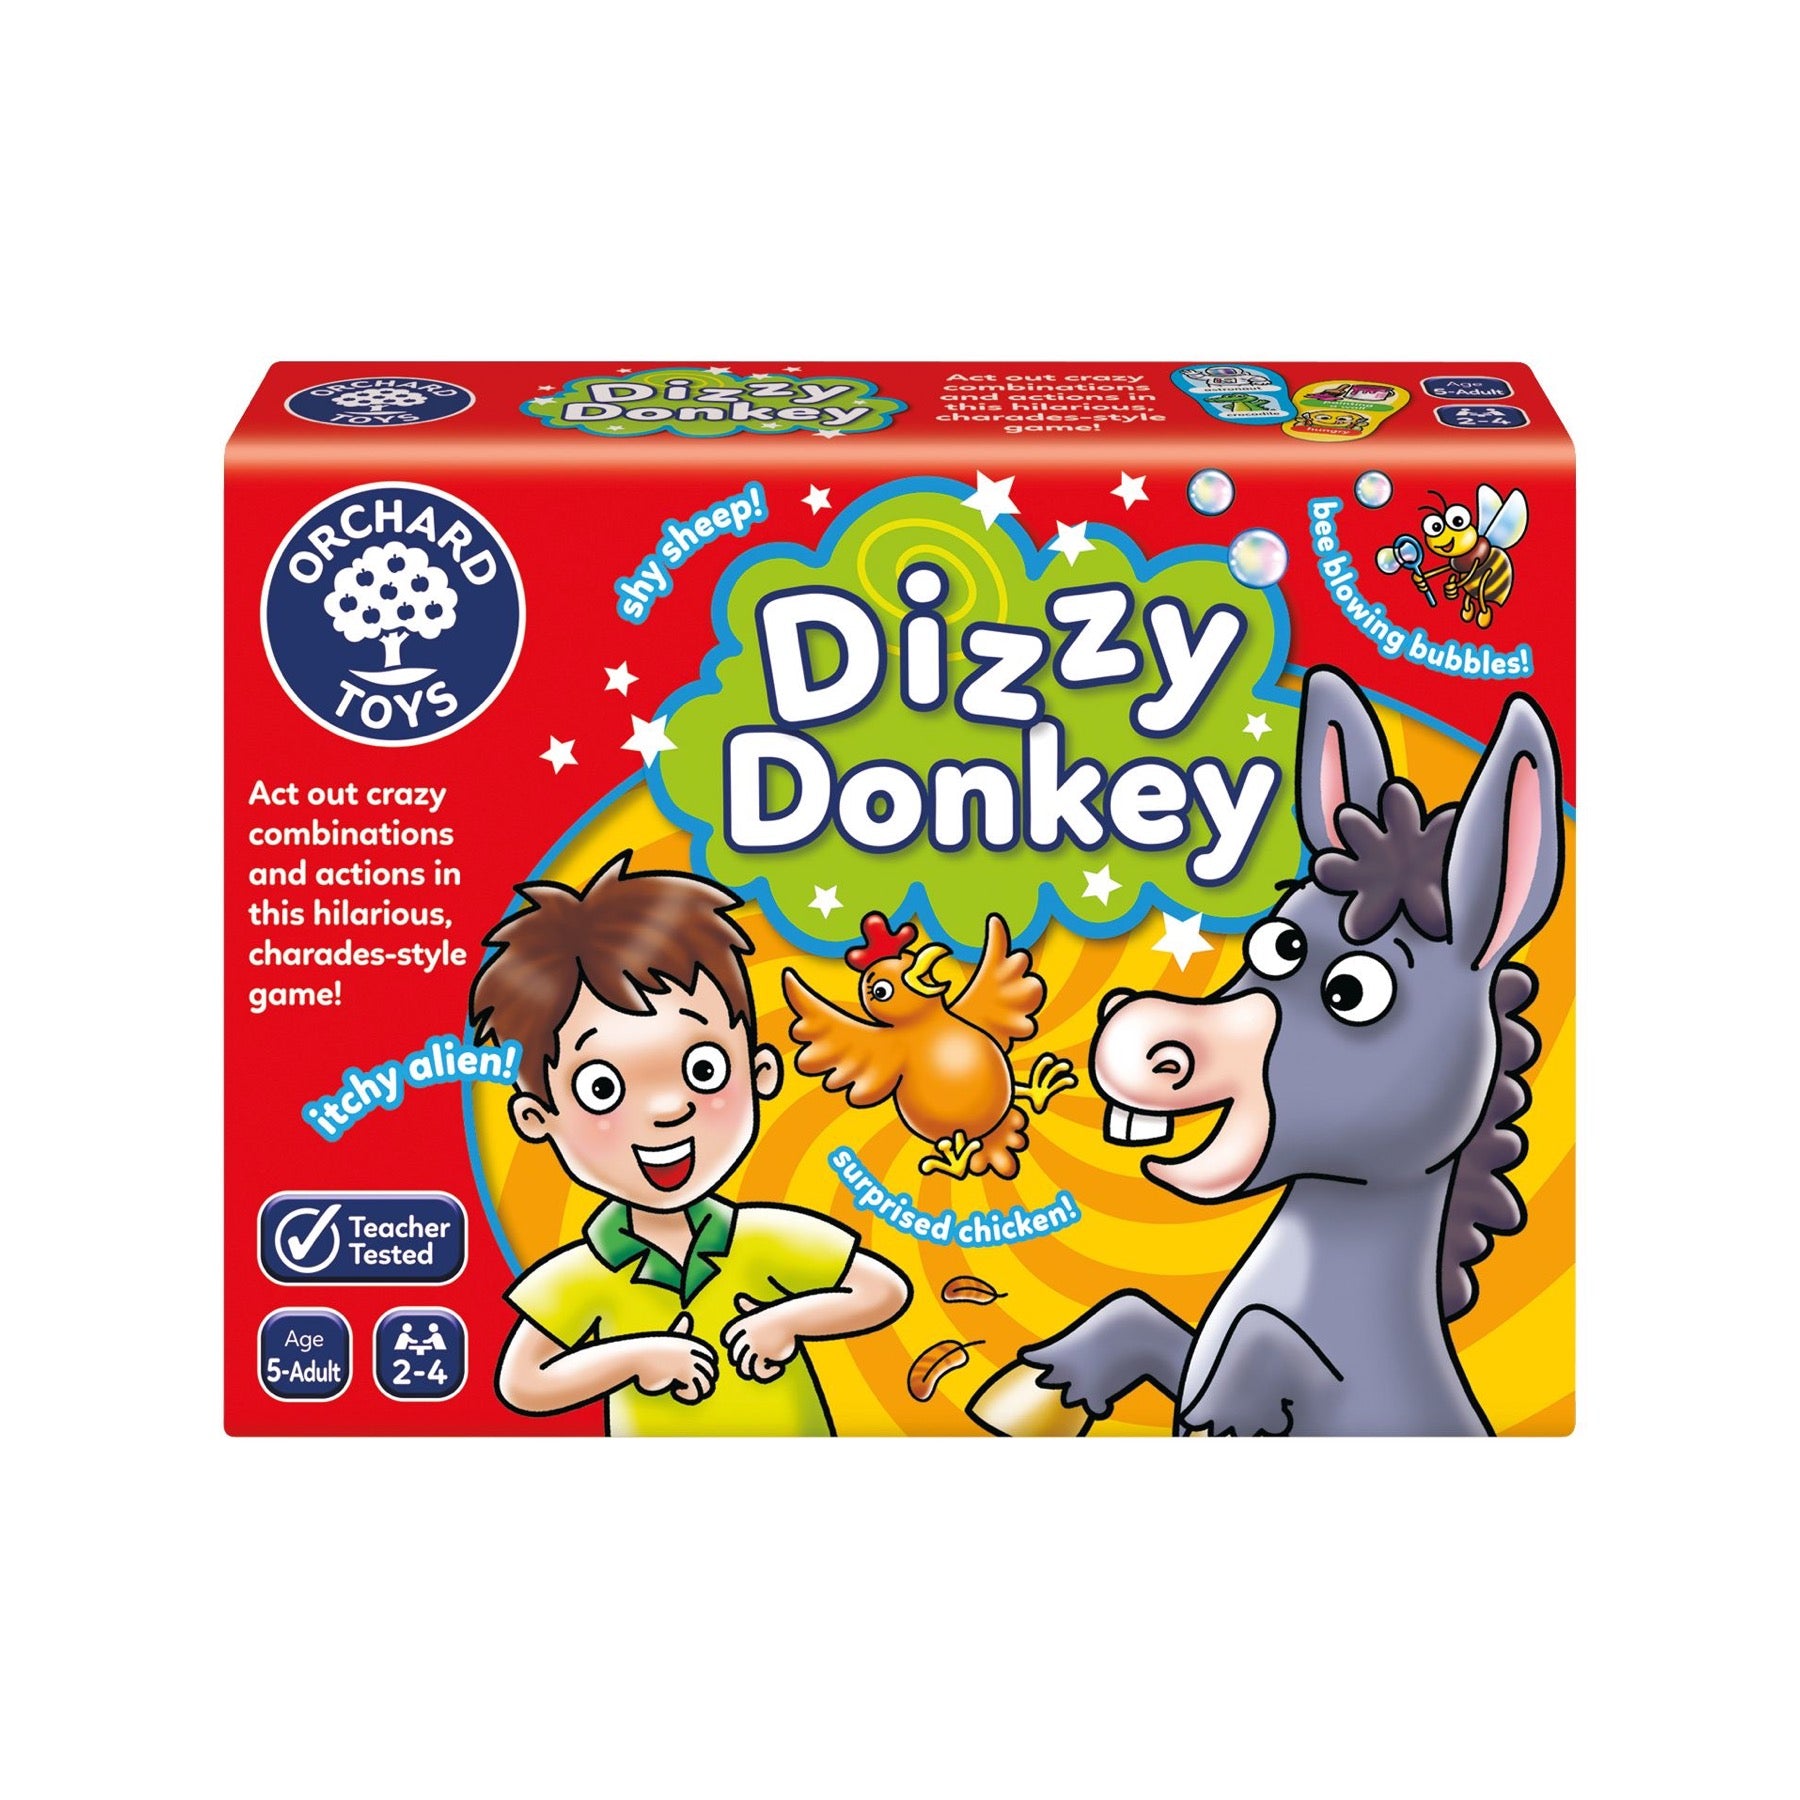 Orchard Toys Dizzy Donkey Game